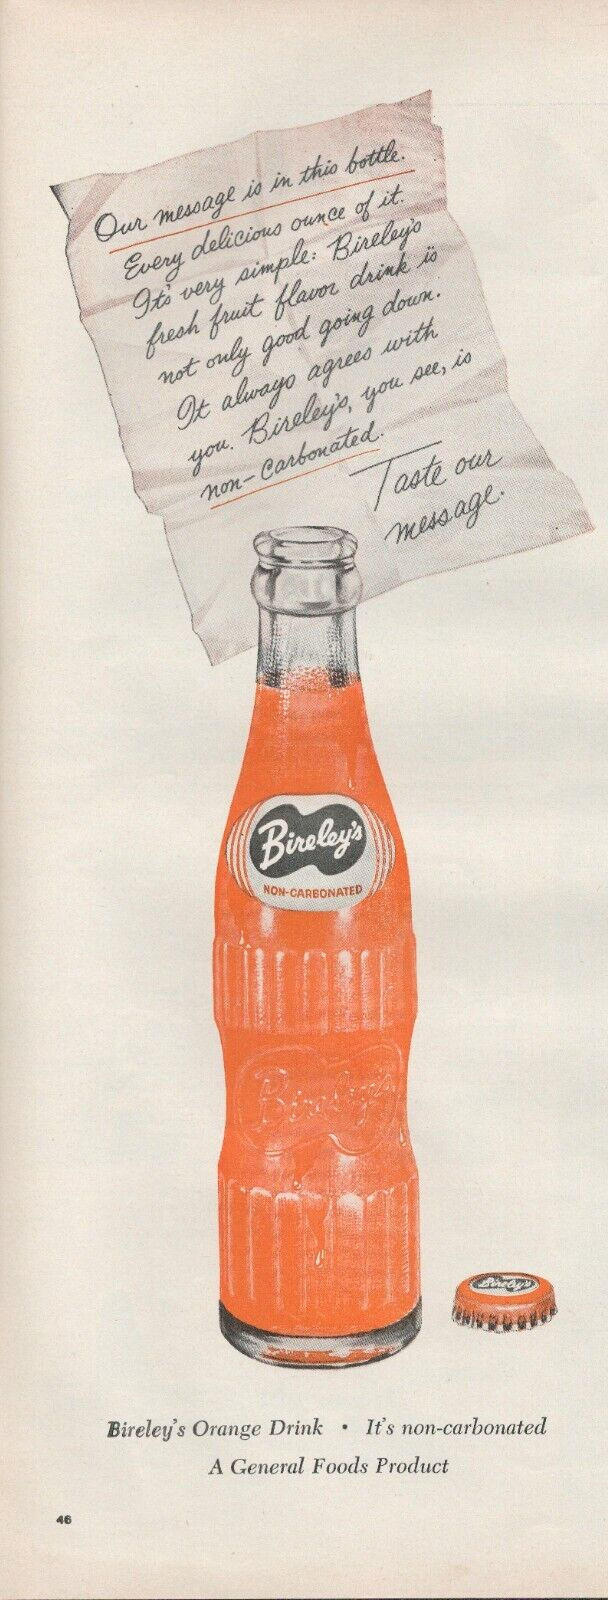 1955 Bireley's Non-Carbonated Orange Drink General Foods Product Print Ad